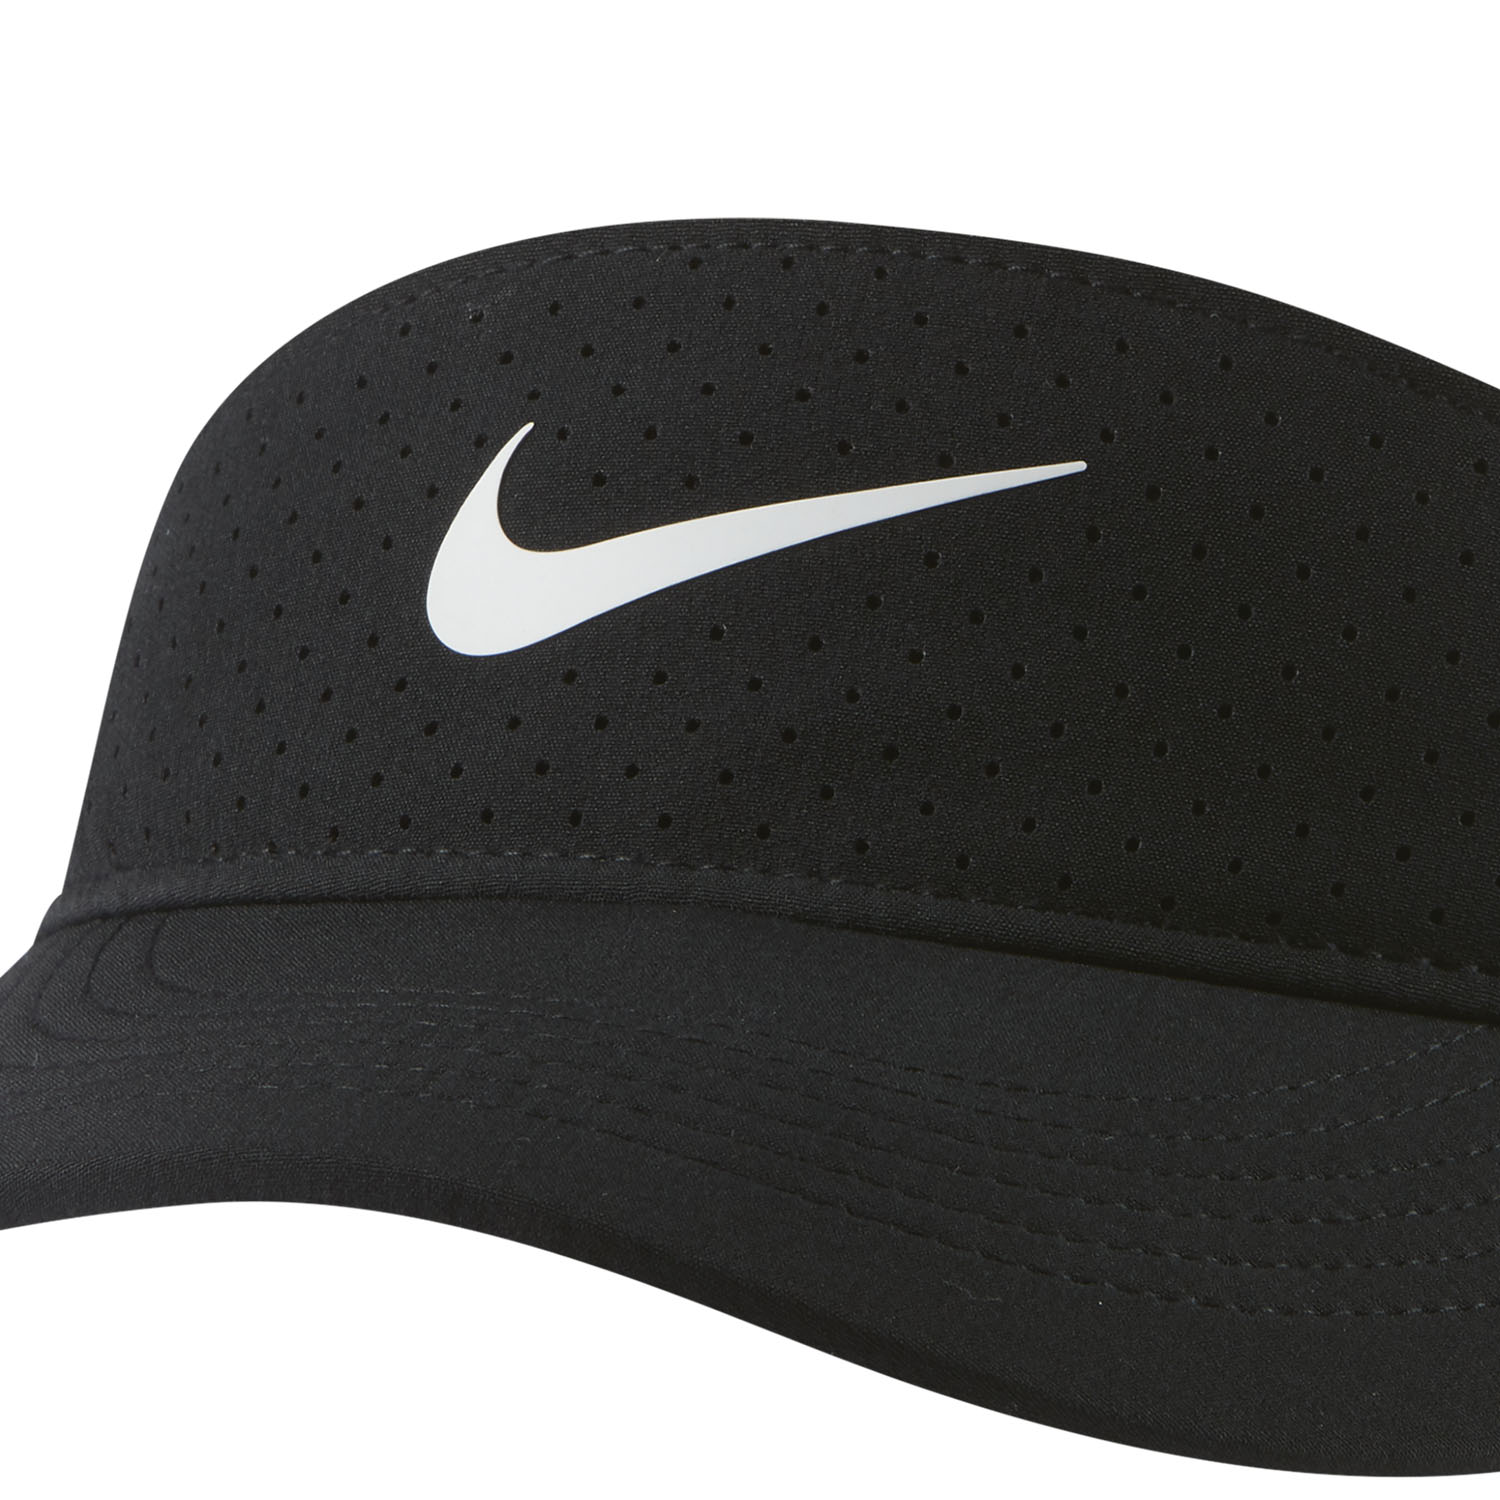 Nike Court Visera de Tenis Mujer - Black/White